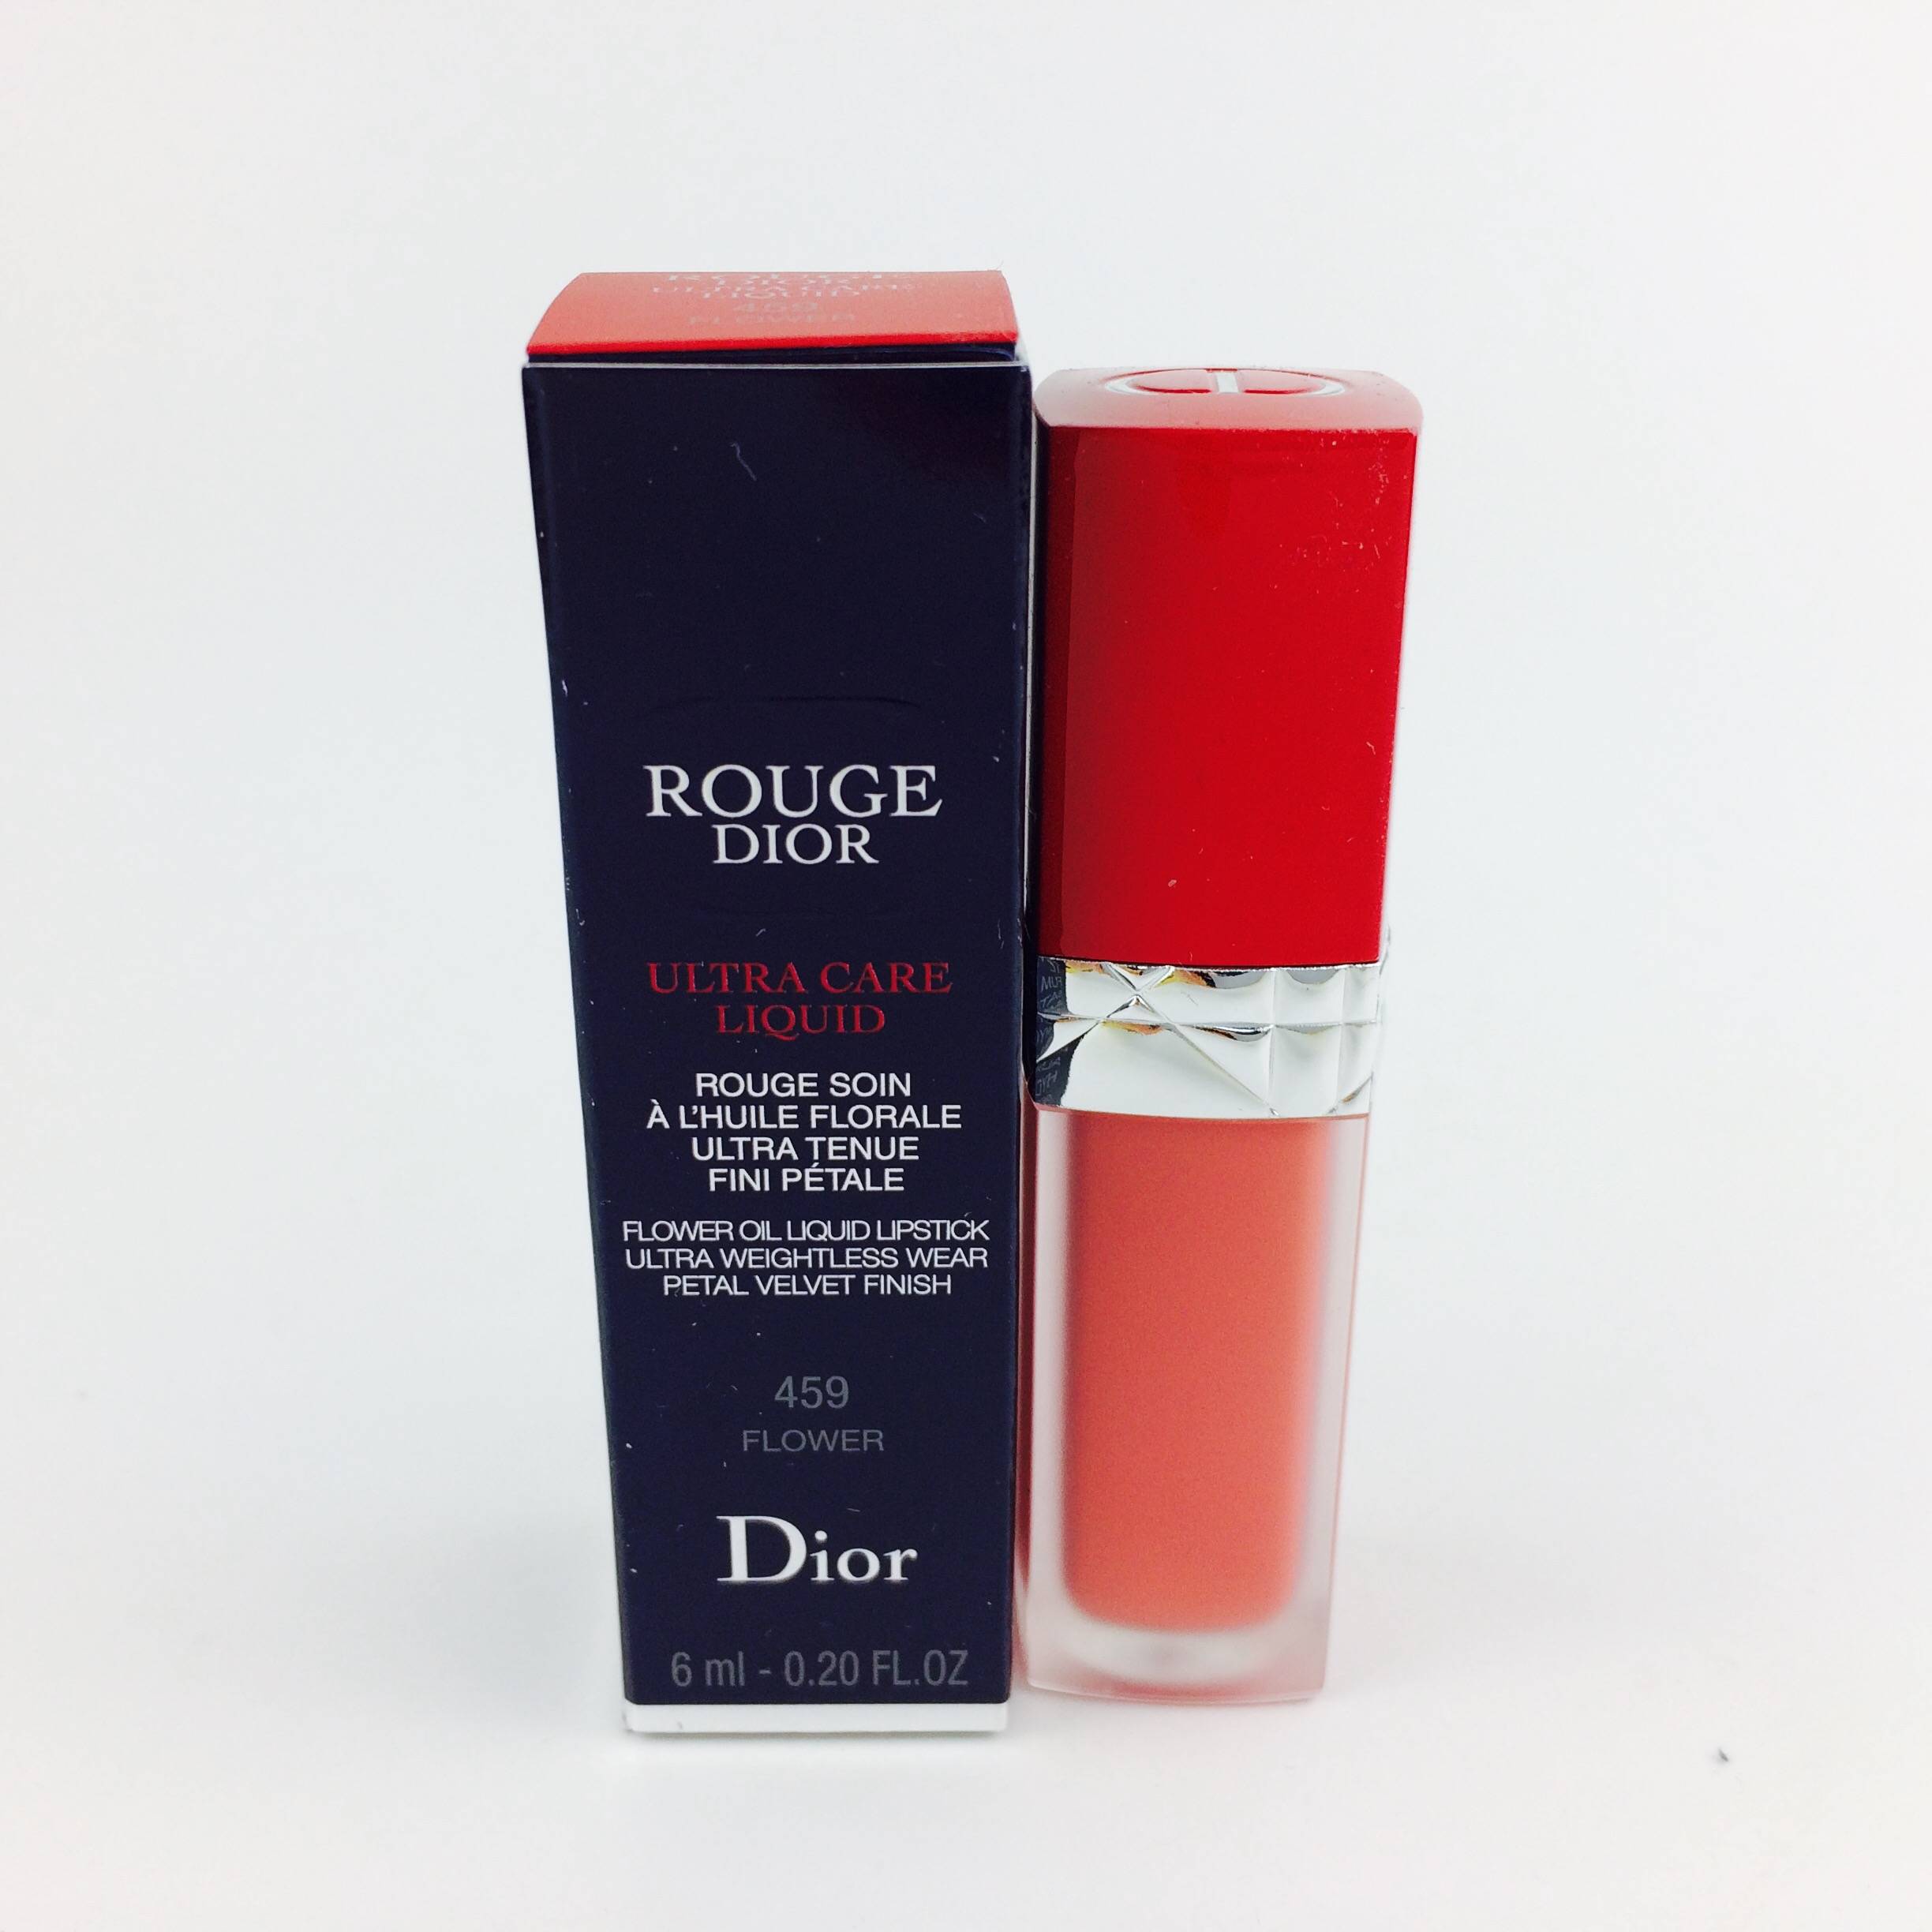 dior 459 lipstick